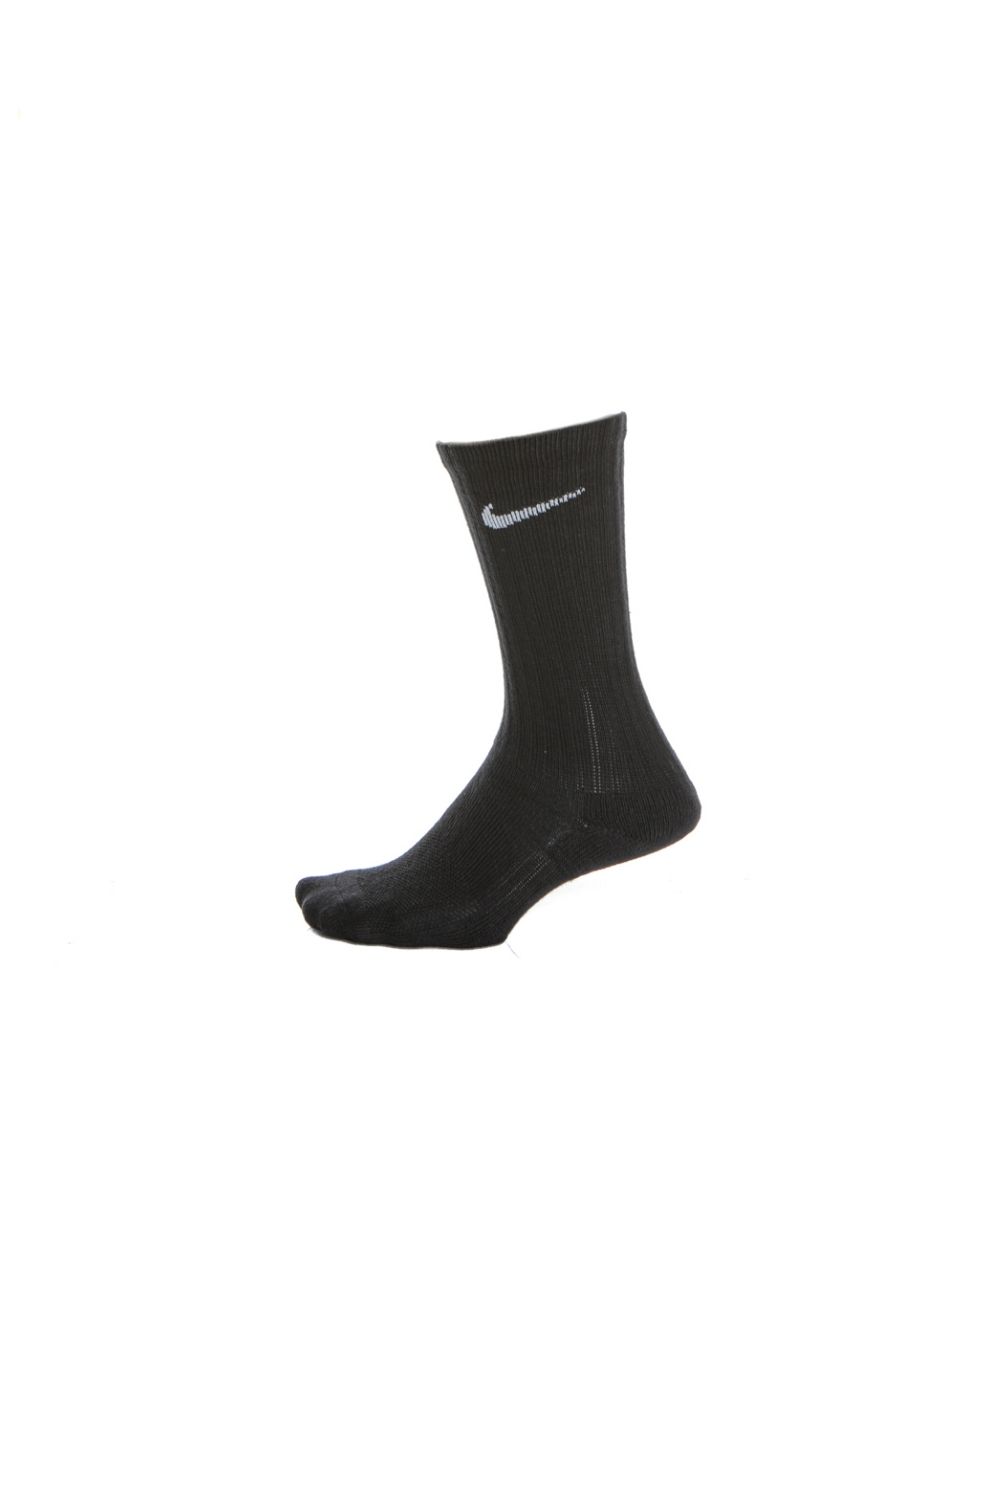 NIKE - Παιδικό σετ 3 κάλτσες NIKE μαύρες Παιδικά/Girls/Αξεσουάρ/Κάλτσες